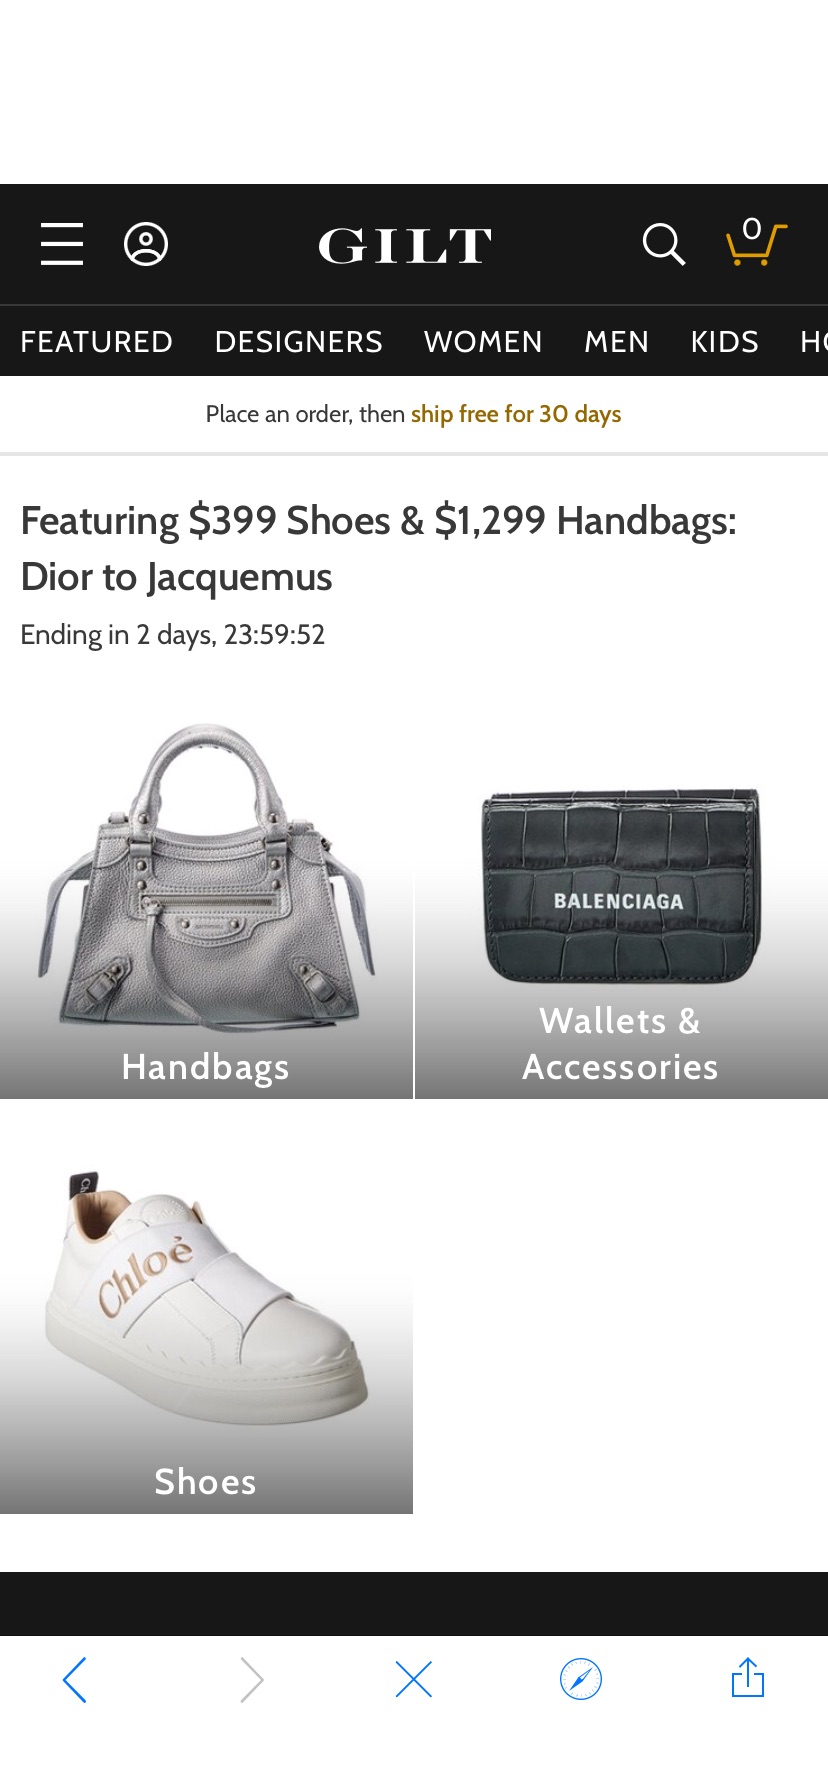 Featuring $399 Shoes & $1,299 Handbags: Dior to Jacquemus / Gilt专场热卖